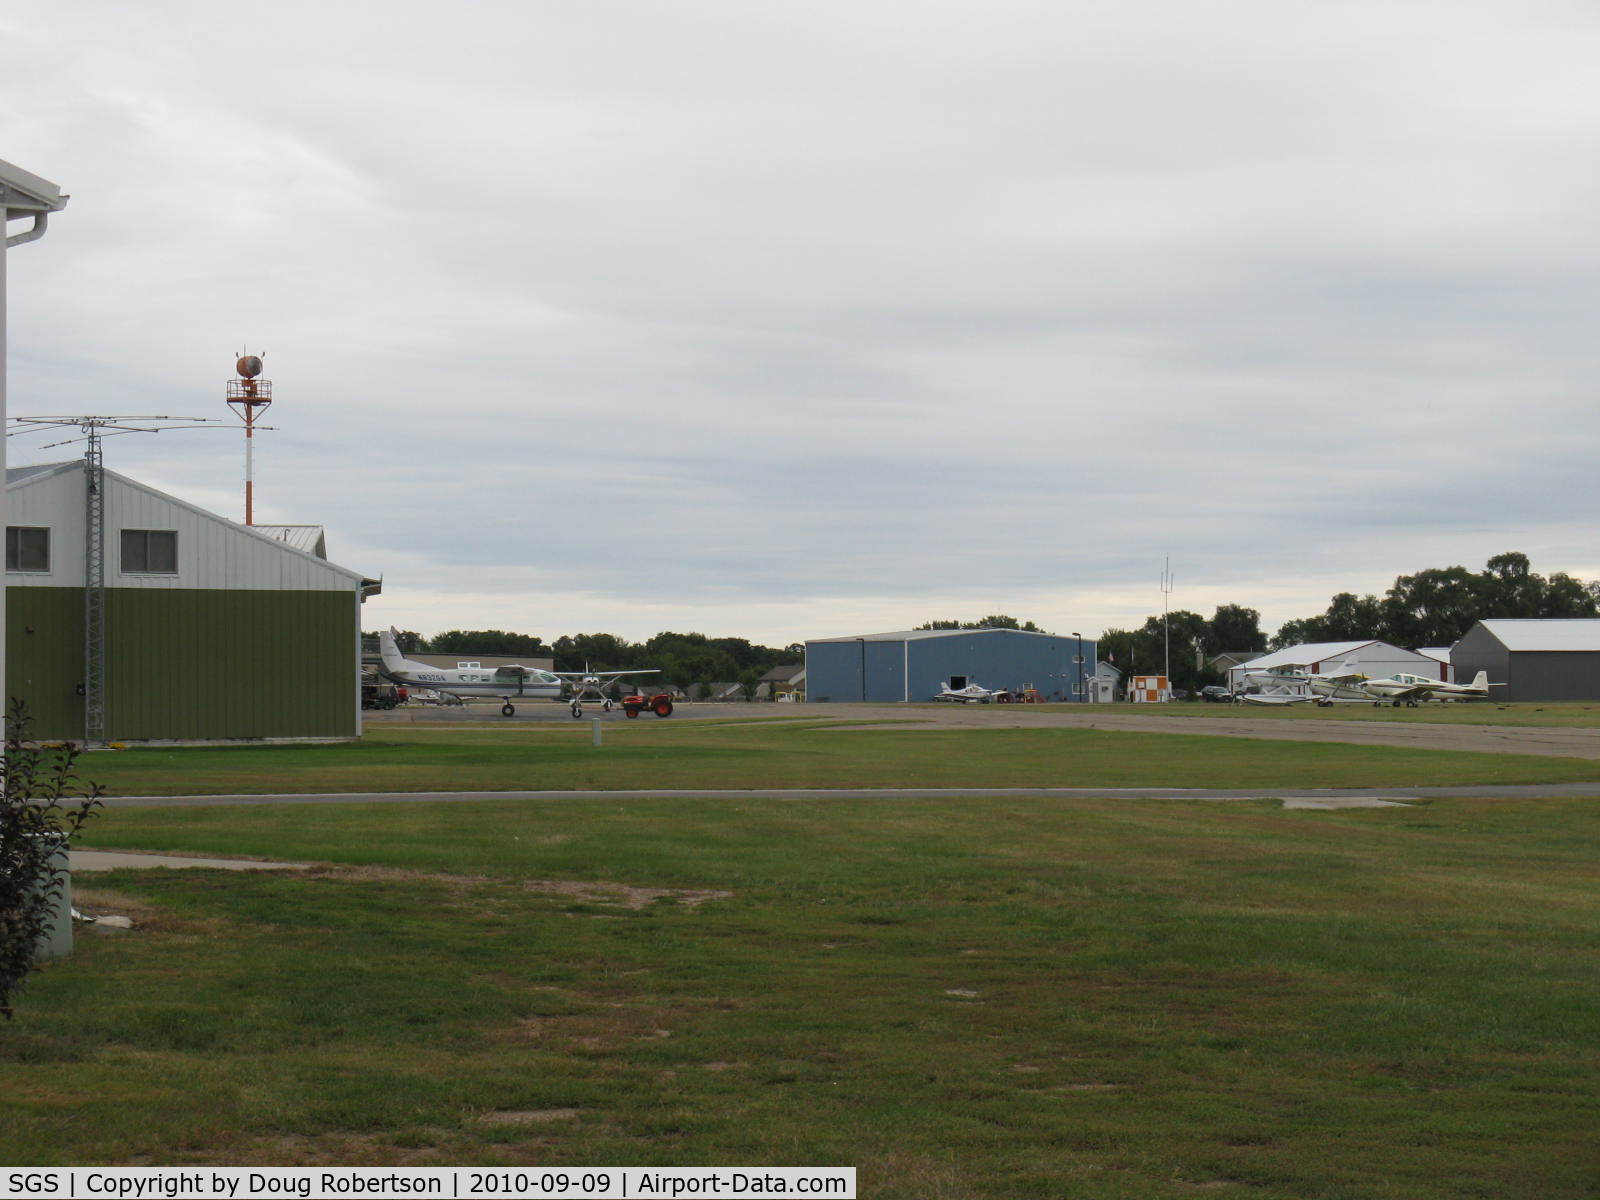 South St Paul Muni-richard E Fleming Fld Airport (SGS) - Airport Rotating Beacon, aircraft hangars